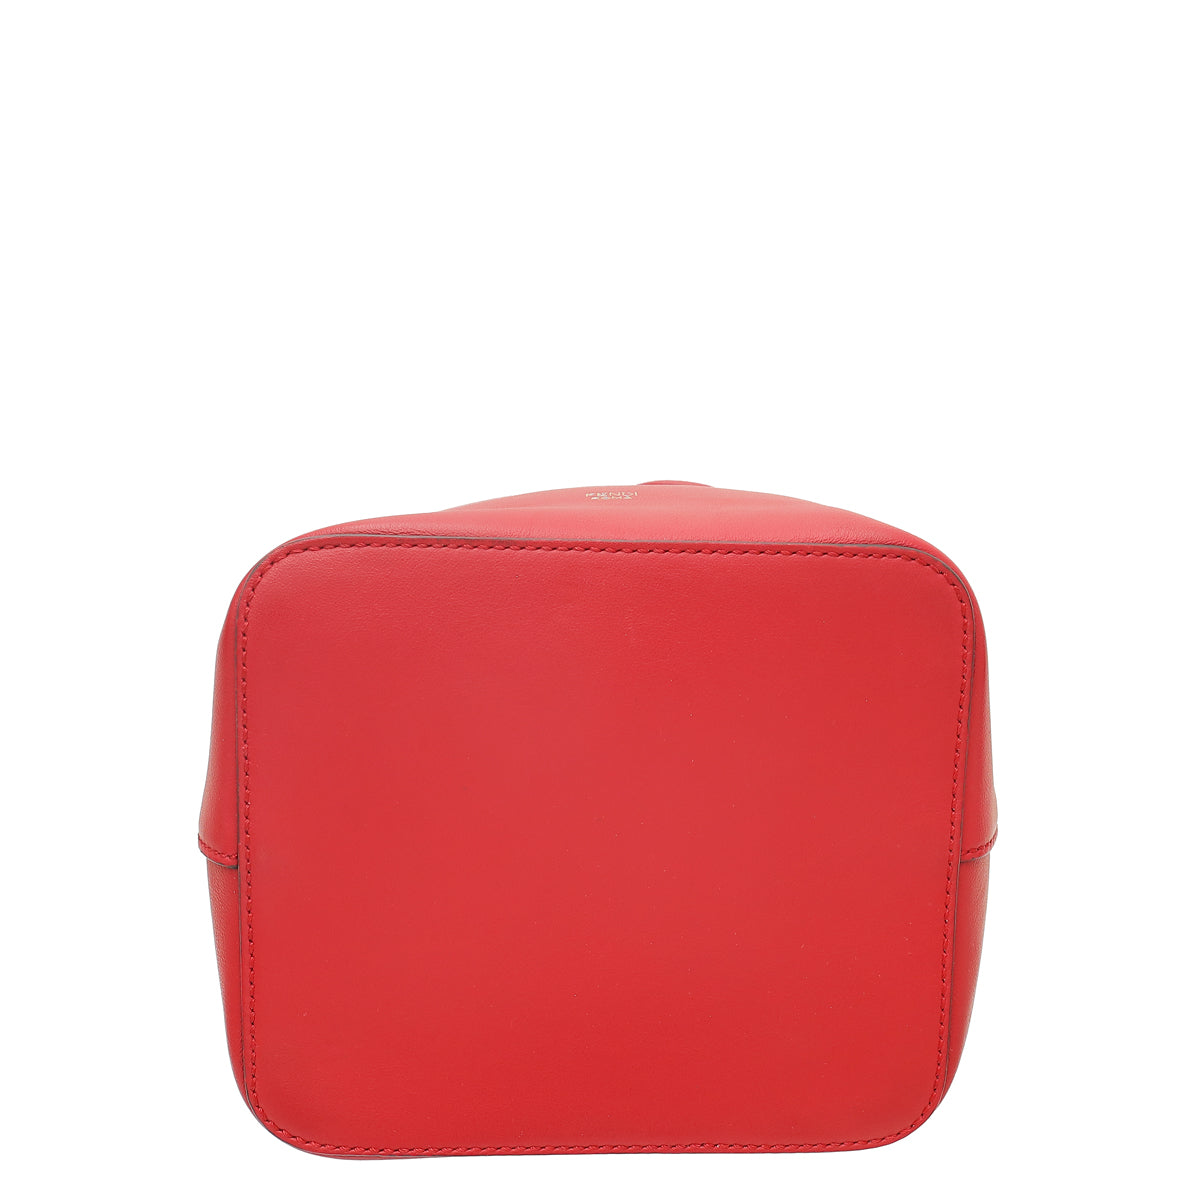 Fendi Red Mon Tresor Small Bucket Bag W/Mini Strap You